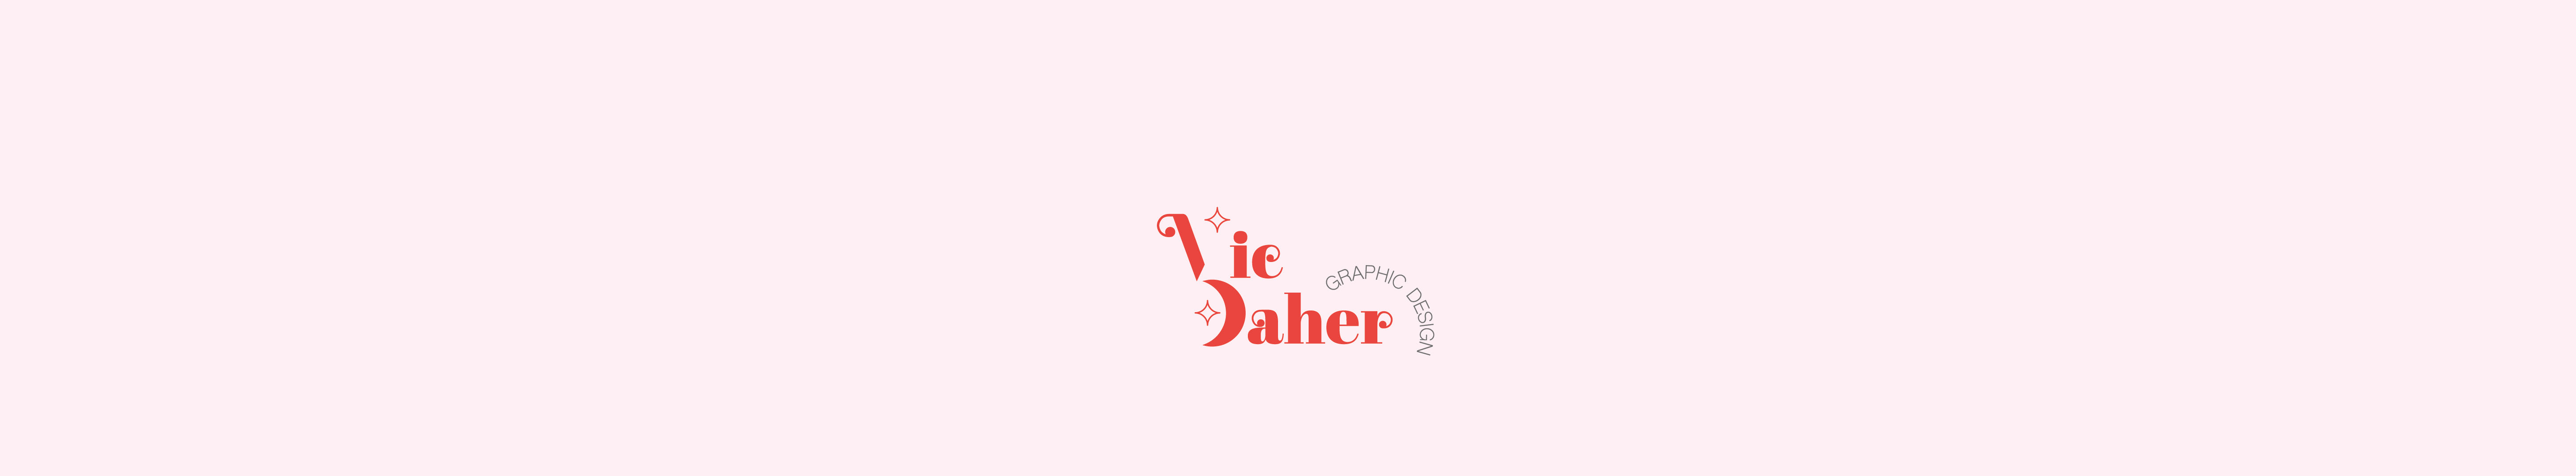 Victoria Daher's profile banner